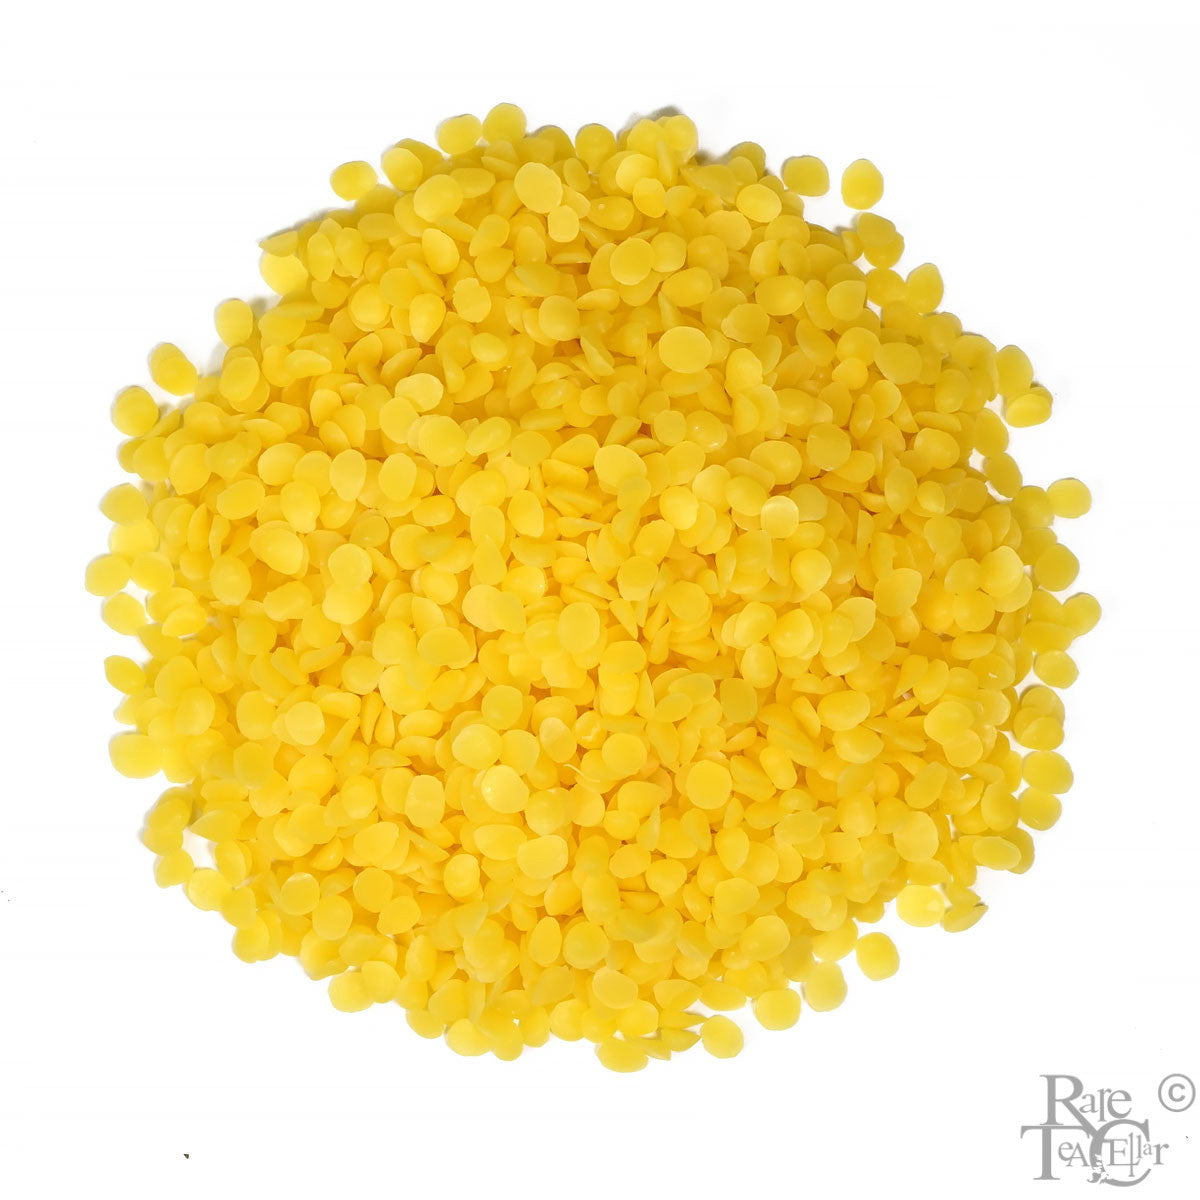 Buy Beeswax Pastilles Yellow